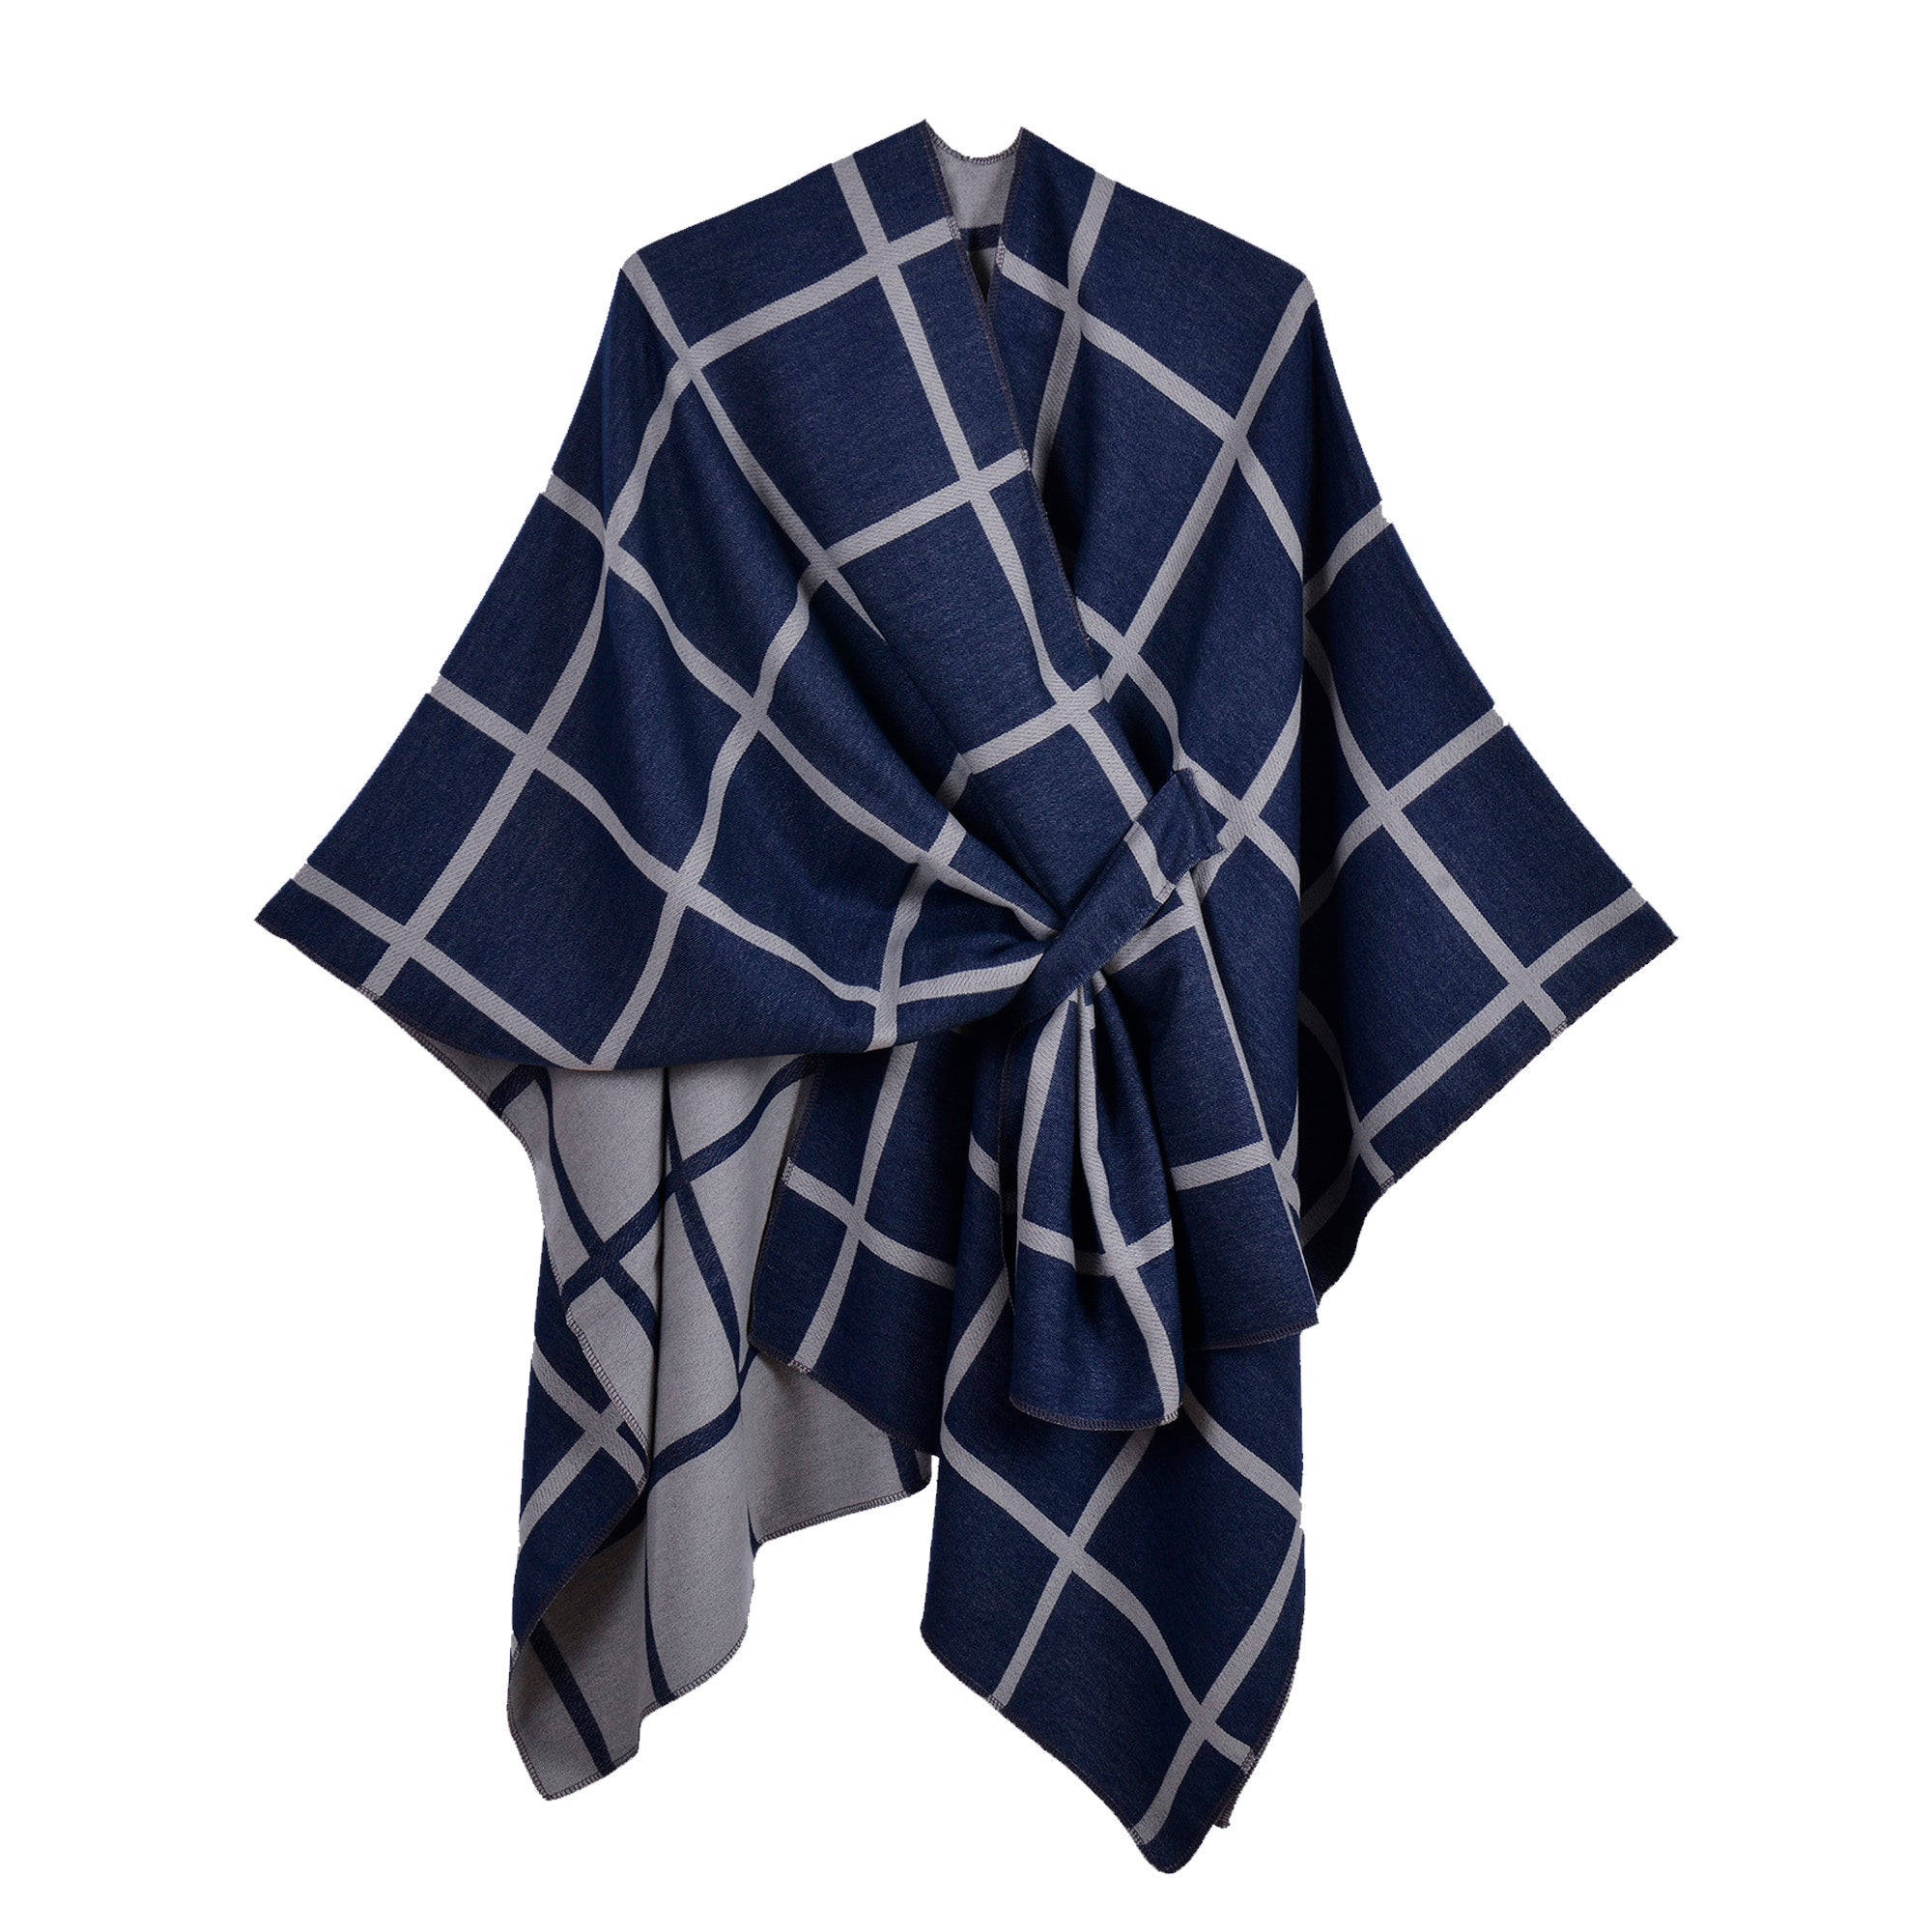 New plaid shawl with bar navy